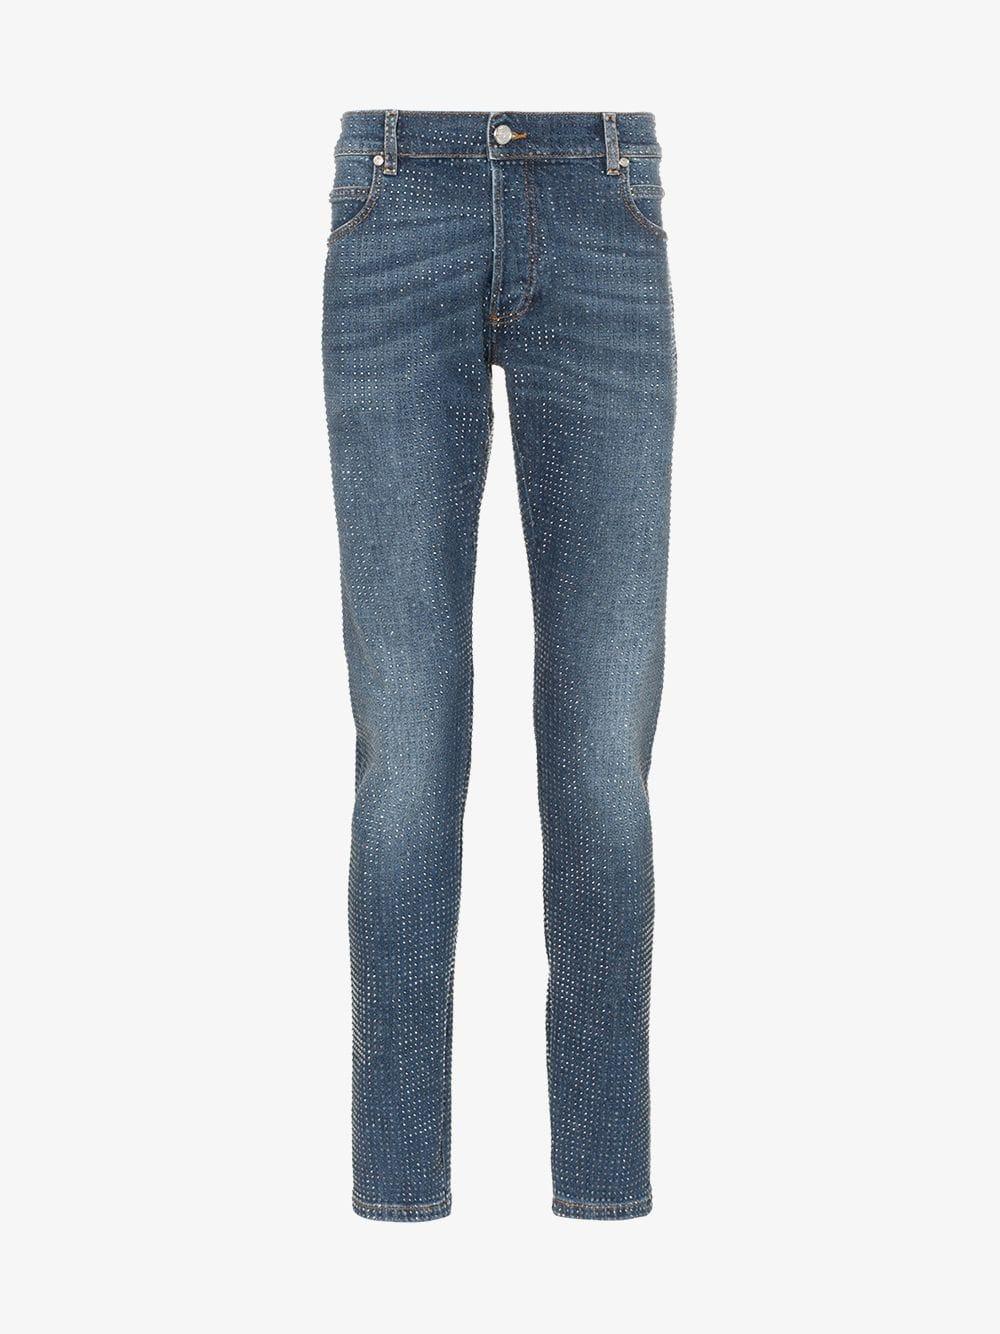 Balmain Denim Rhinestone Embellished Skinny Jeans in Blue for Men - Lyst